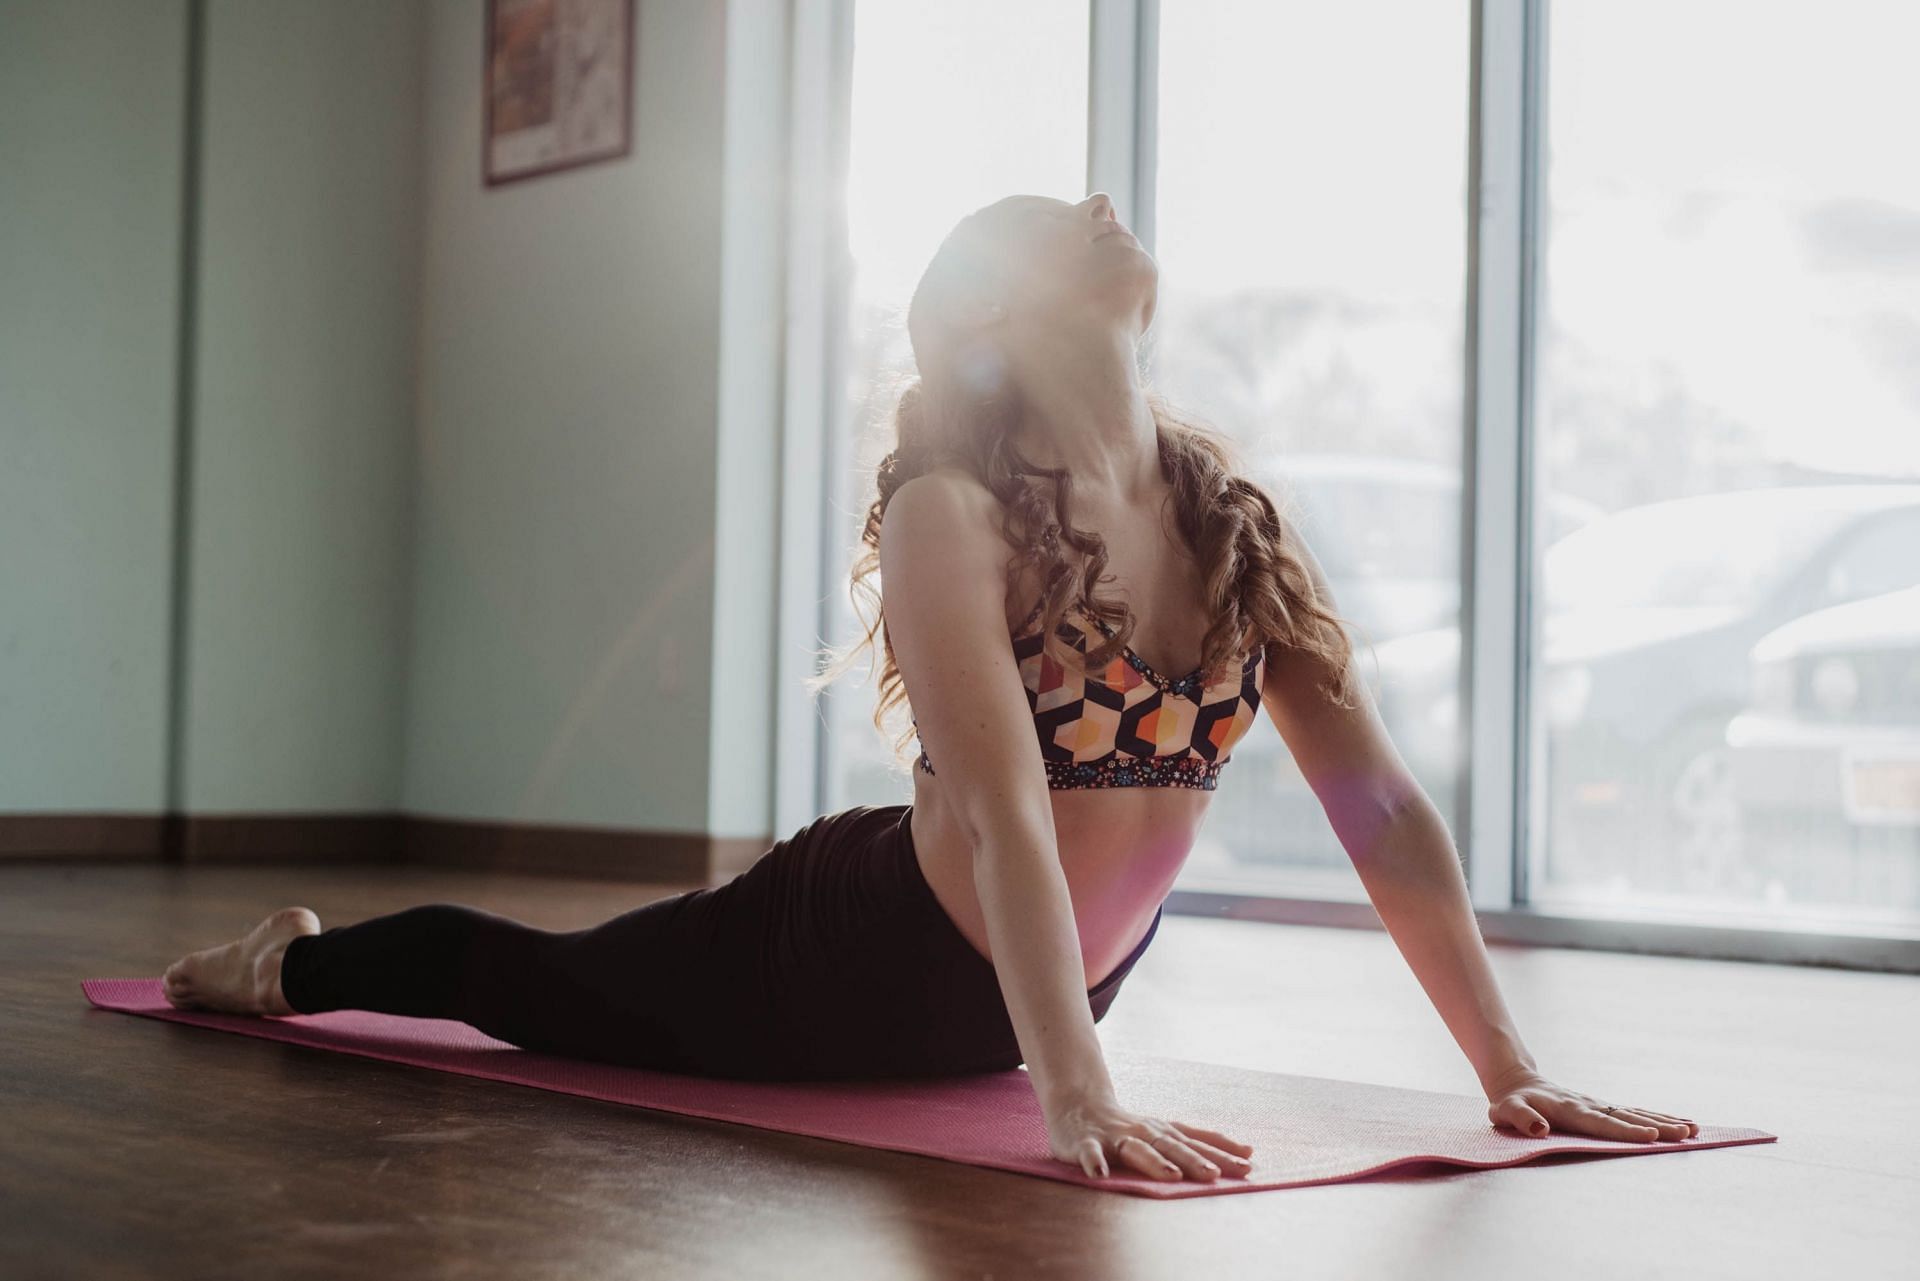 5 Bikram Yoga Exercises & Poses for Weight Loss